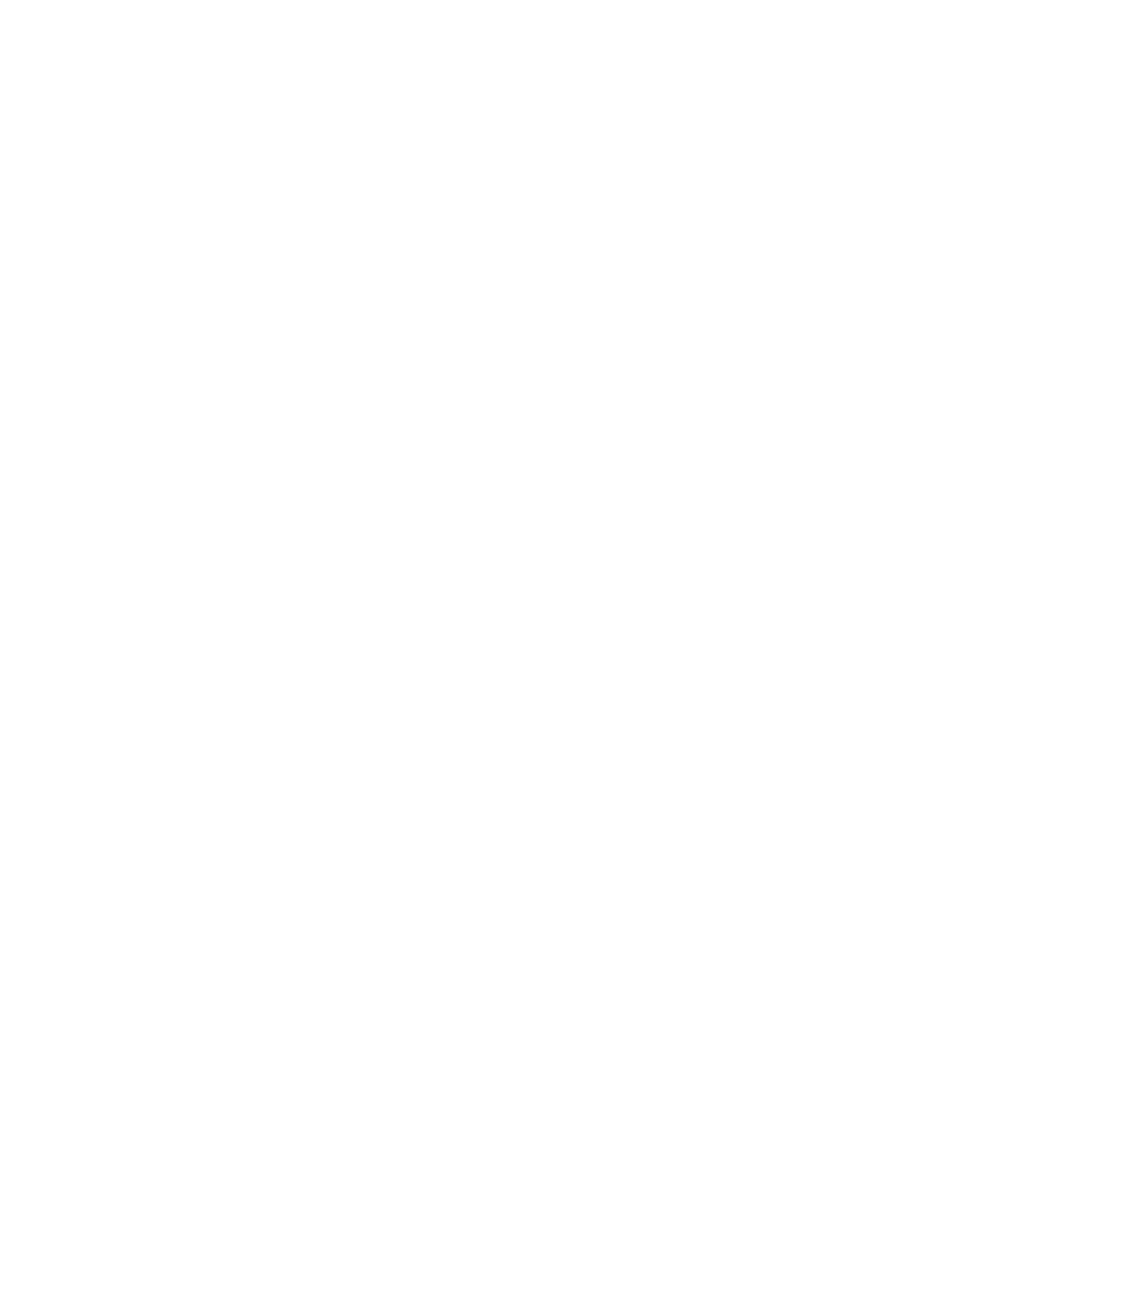 Berkshire Hathaway Homeservices